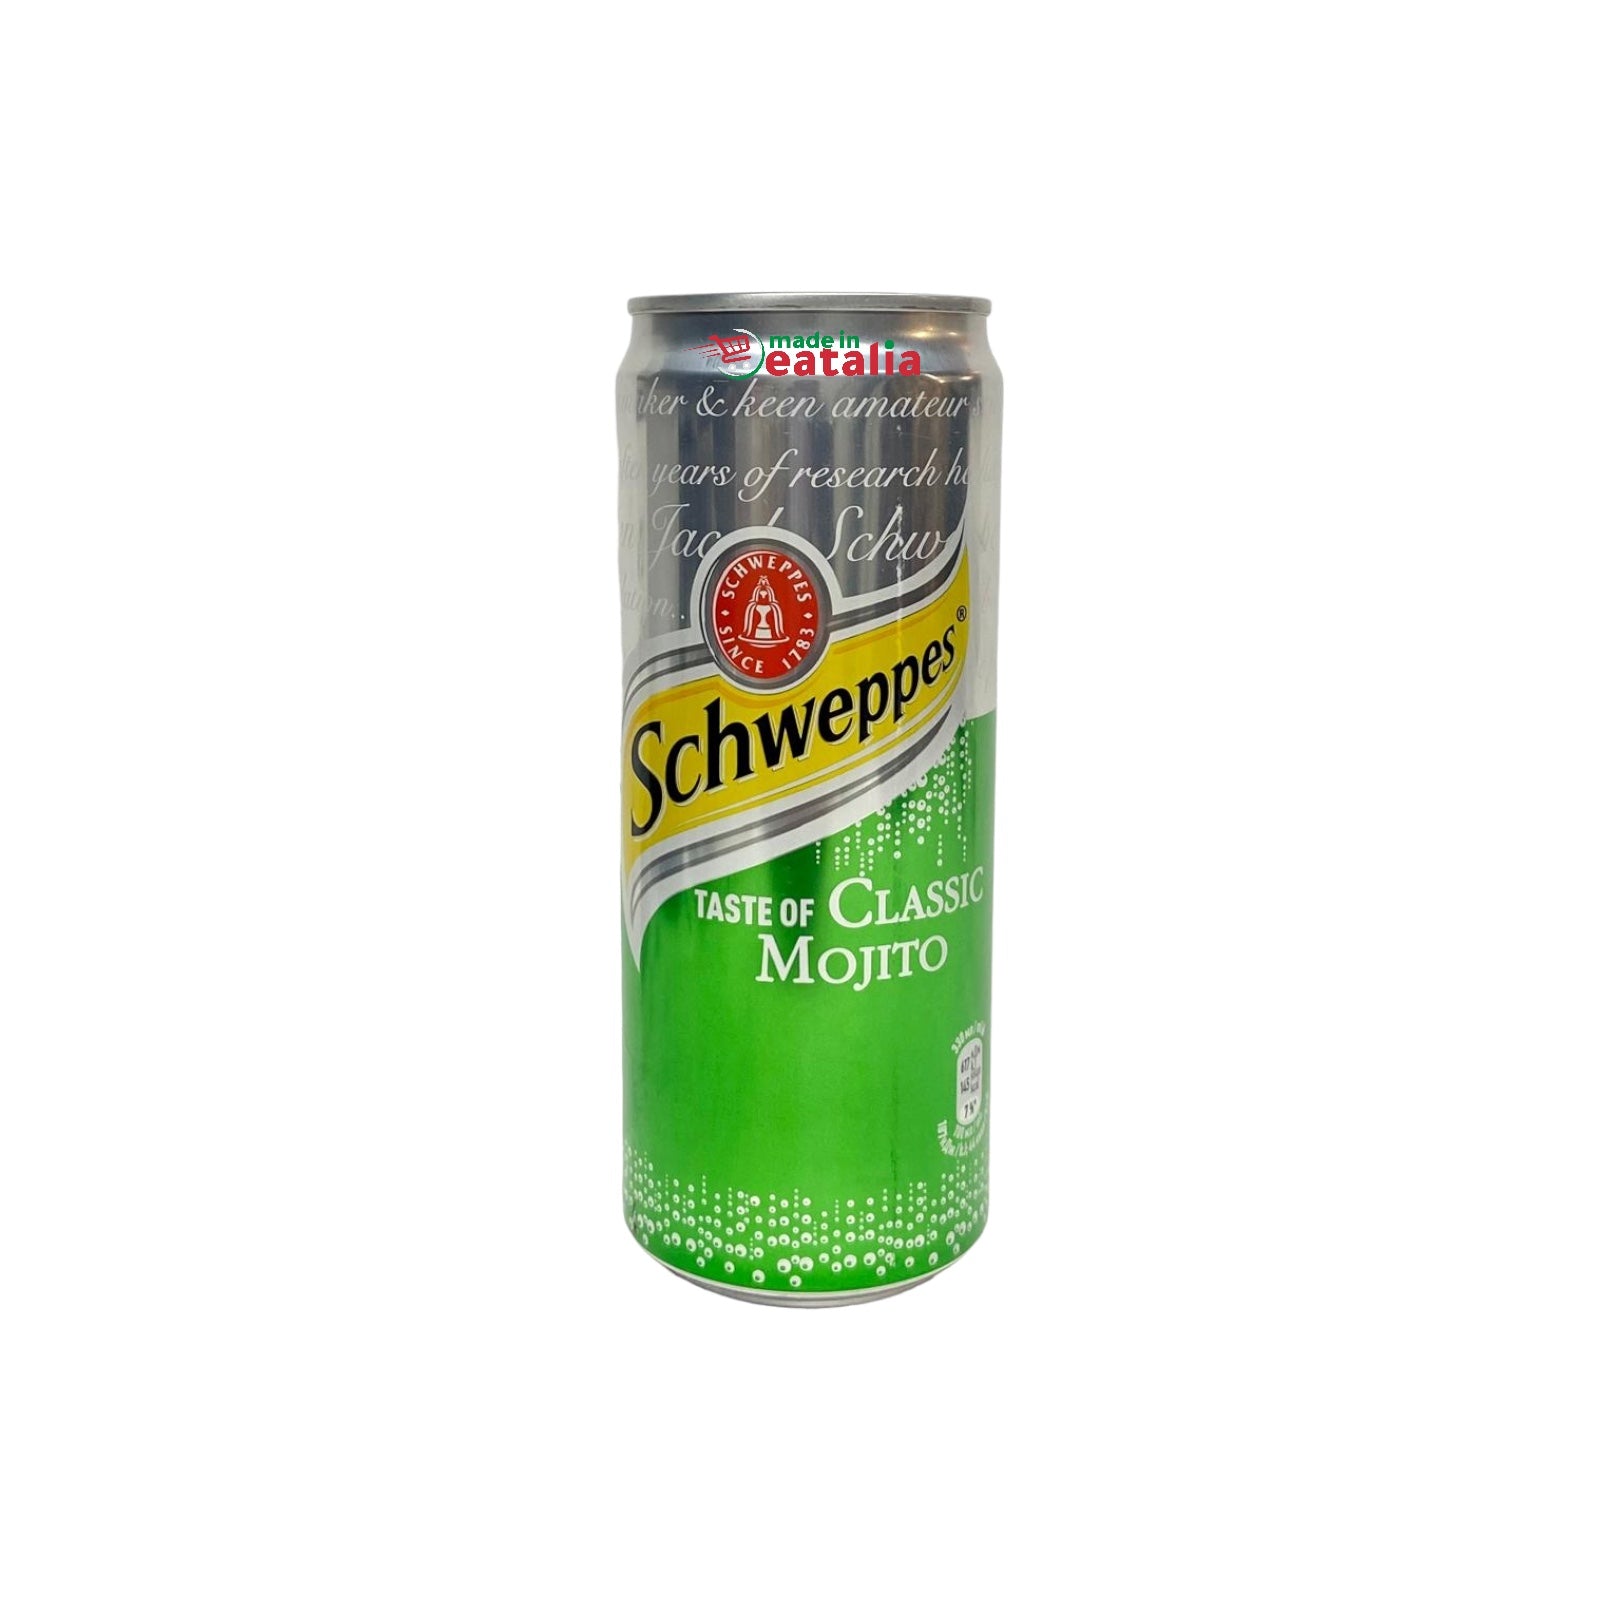 Schweppes Taste of Classic Mojito 330ml